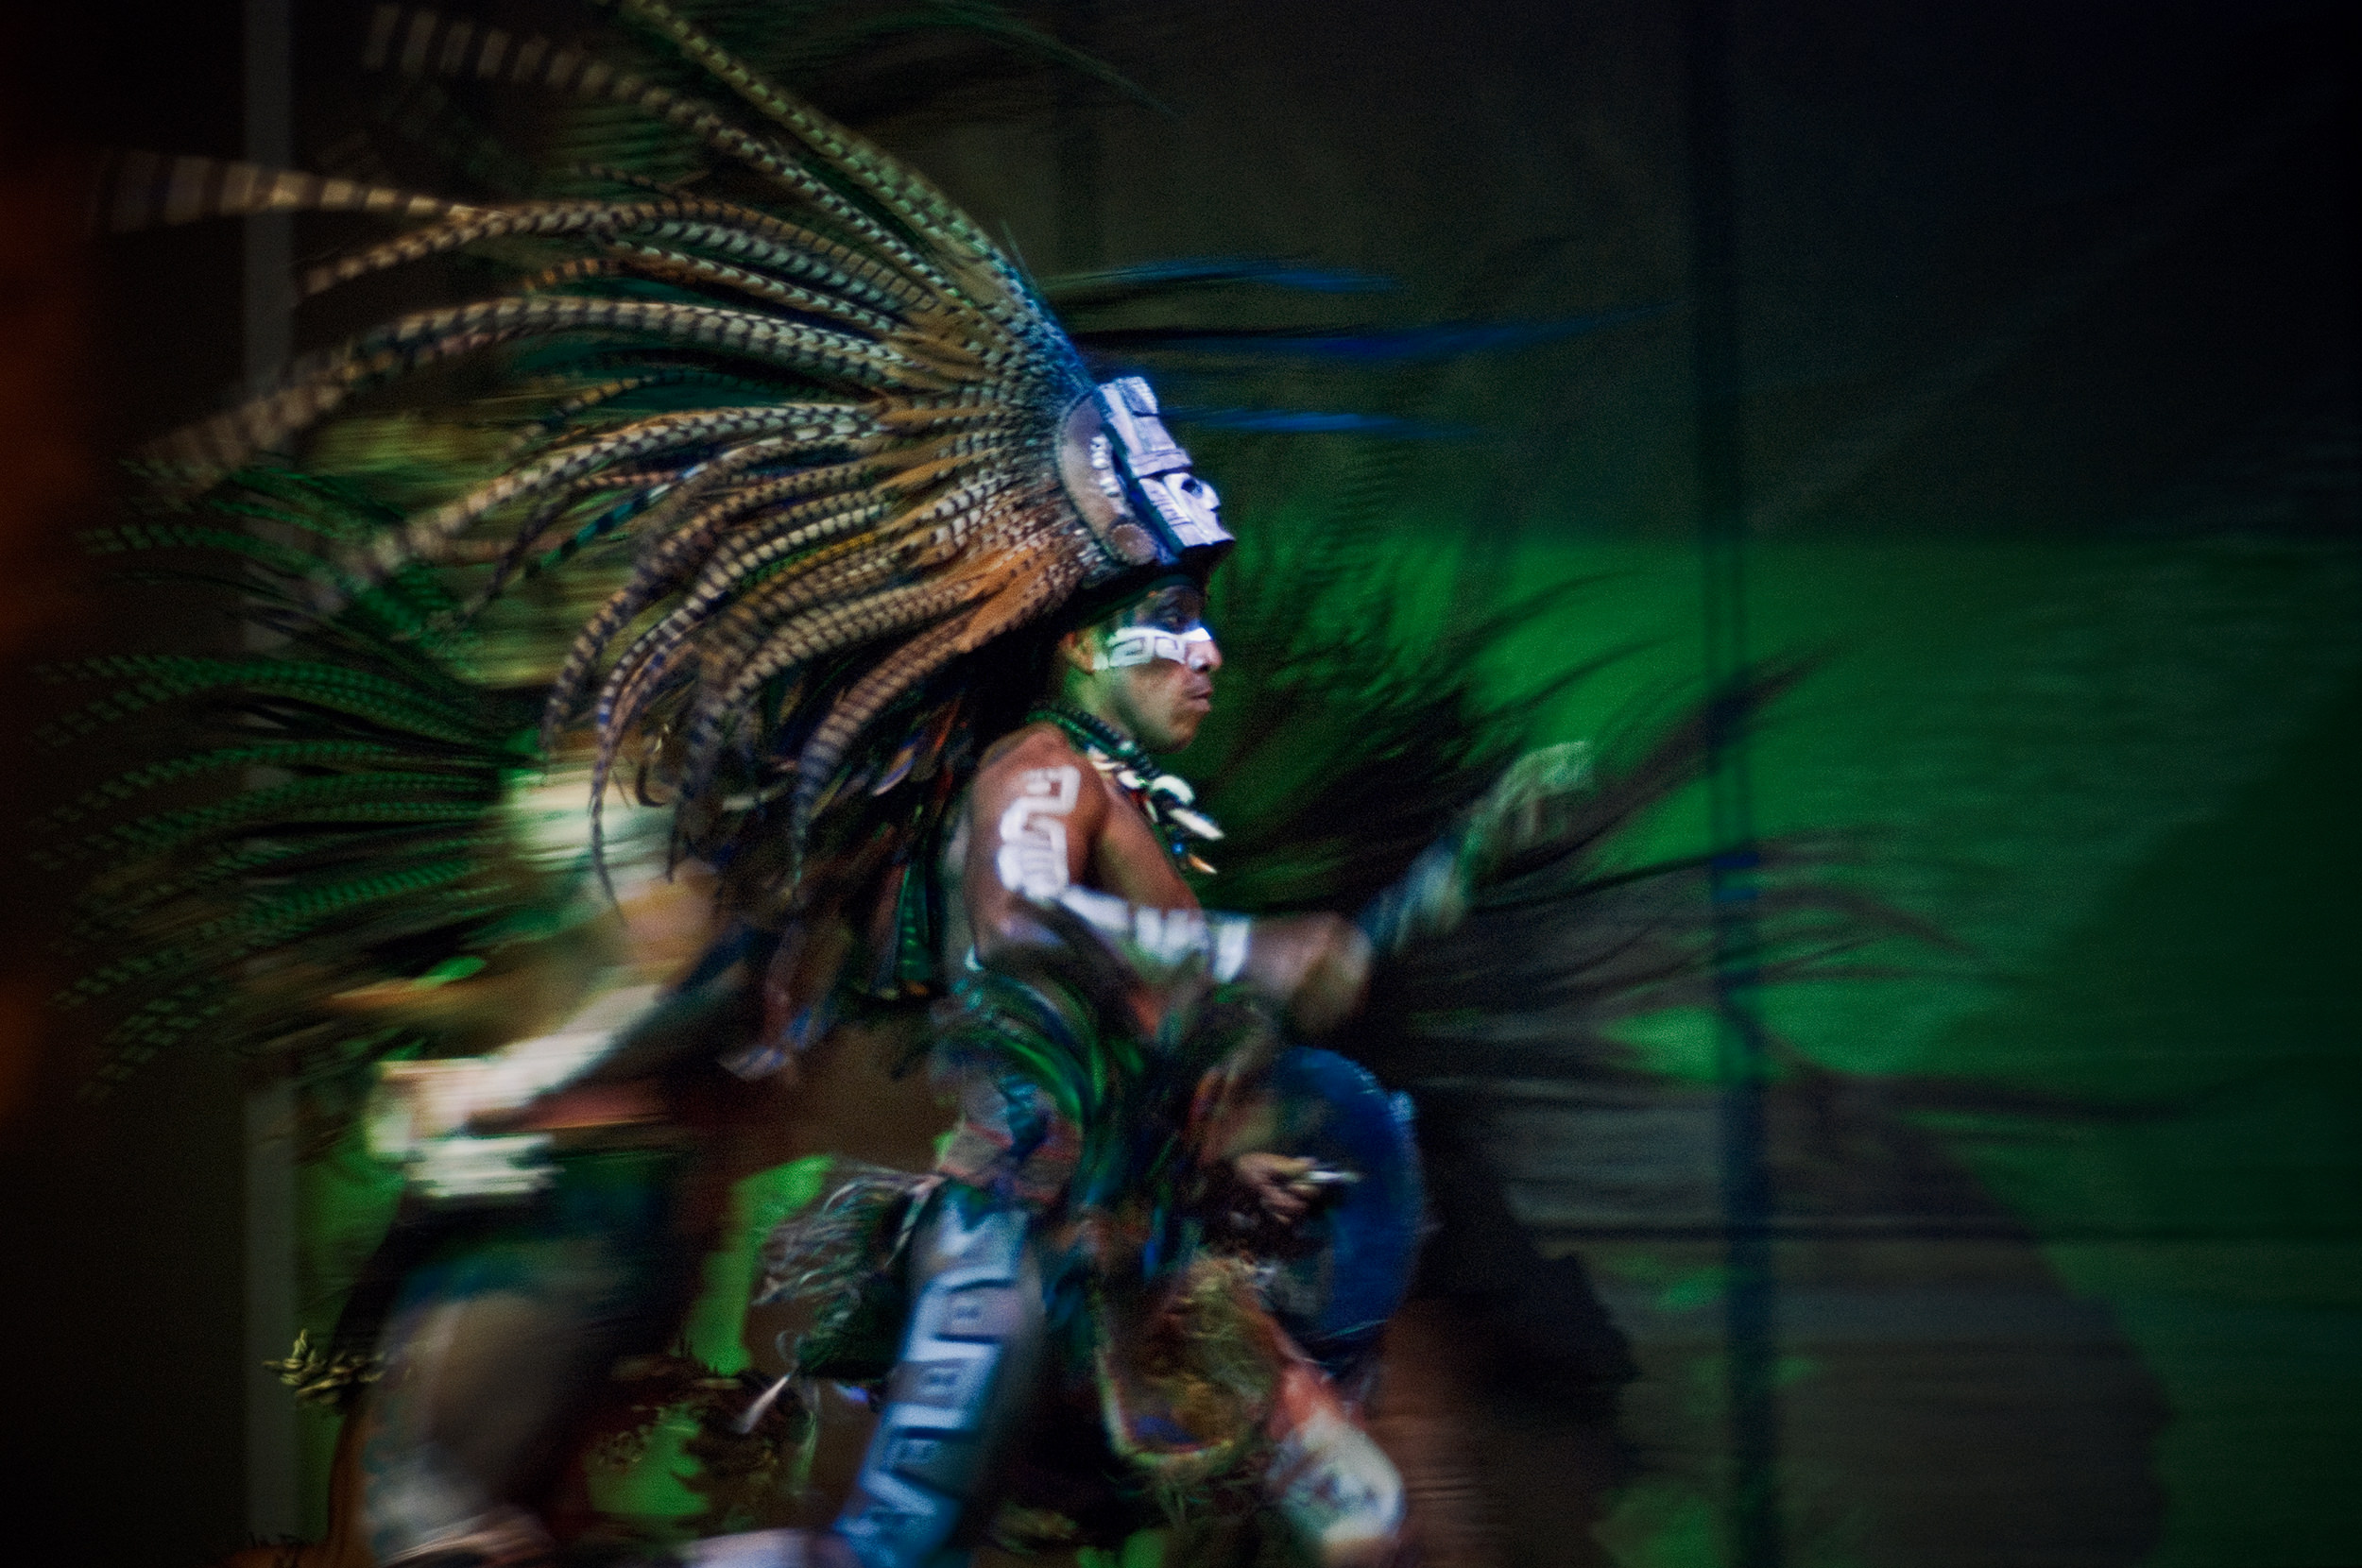 wojtek-jakubiec-photographer-montreal-mayan-mexico-documentary-mayan-show-man-running-NEW.jpg